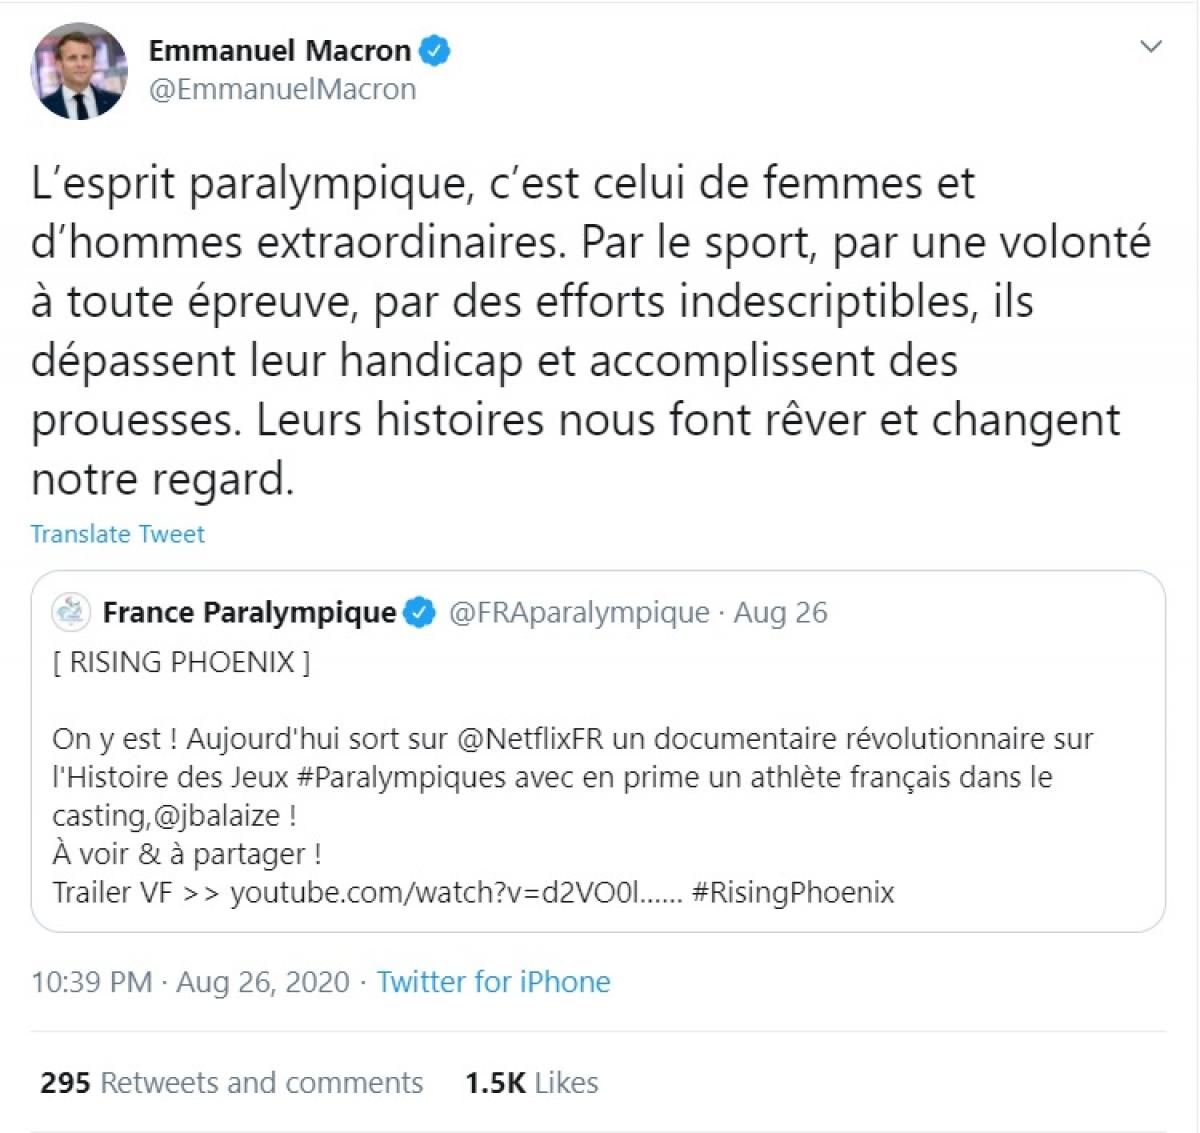 Emmanuel's Macron tweet about Rising Phoenix